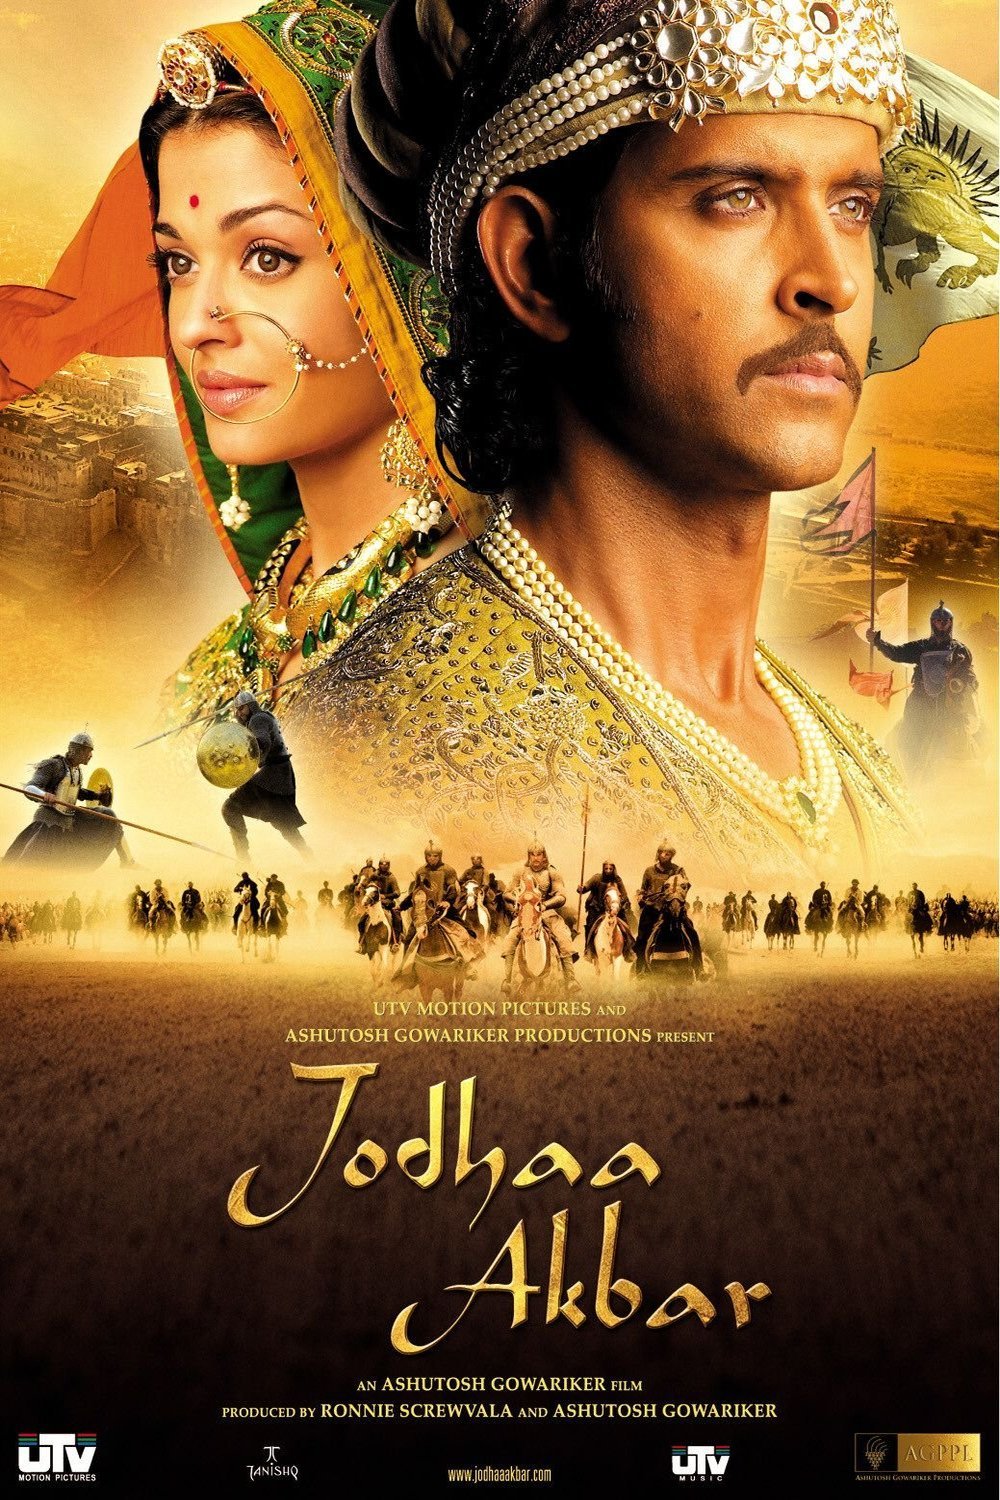 L'affiche originale du film Jodhaa Akbar en Hindi